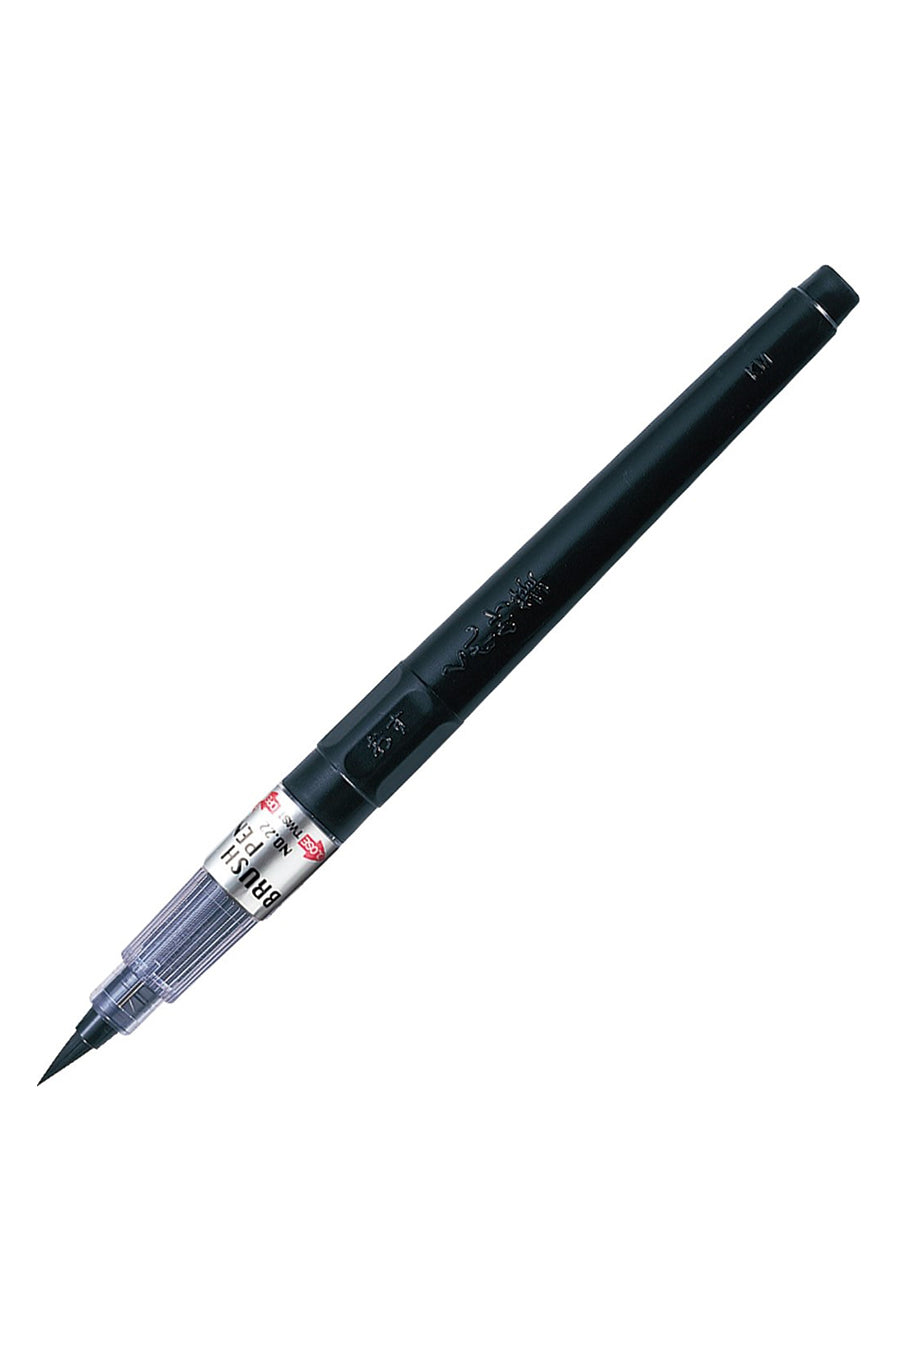 Zig® Cartoonist Brush Pens